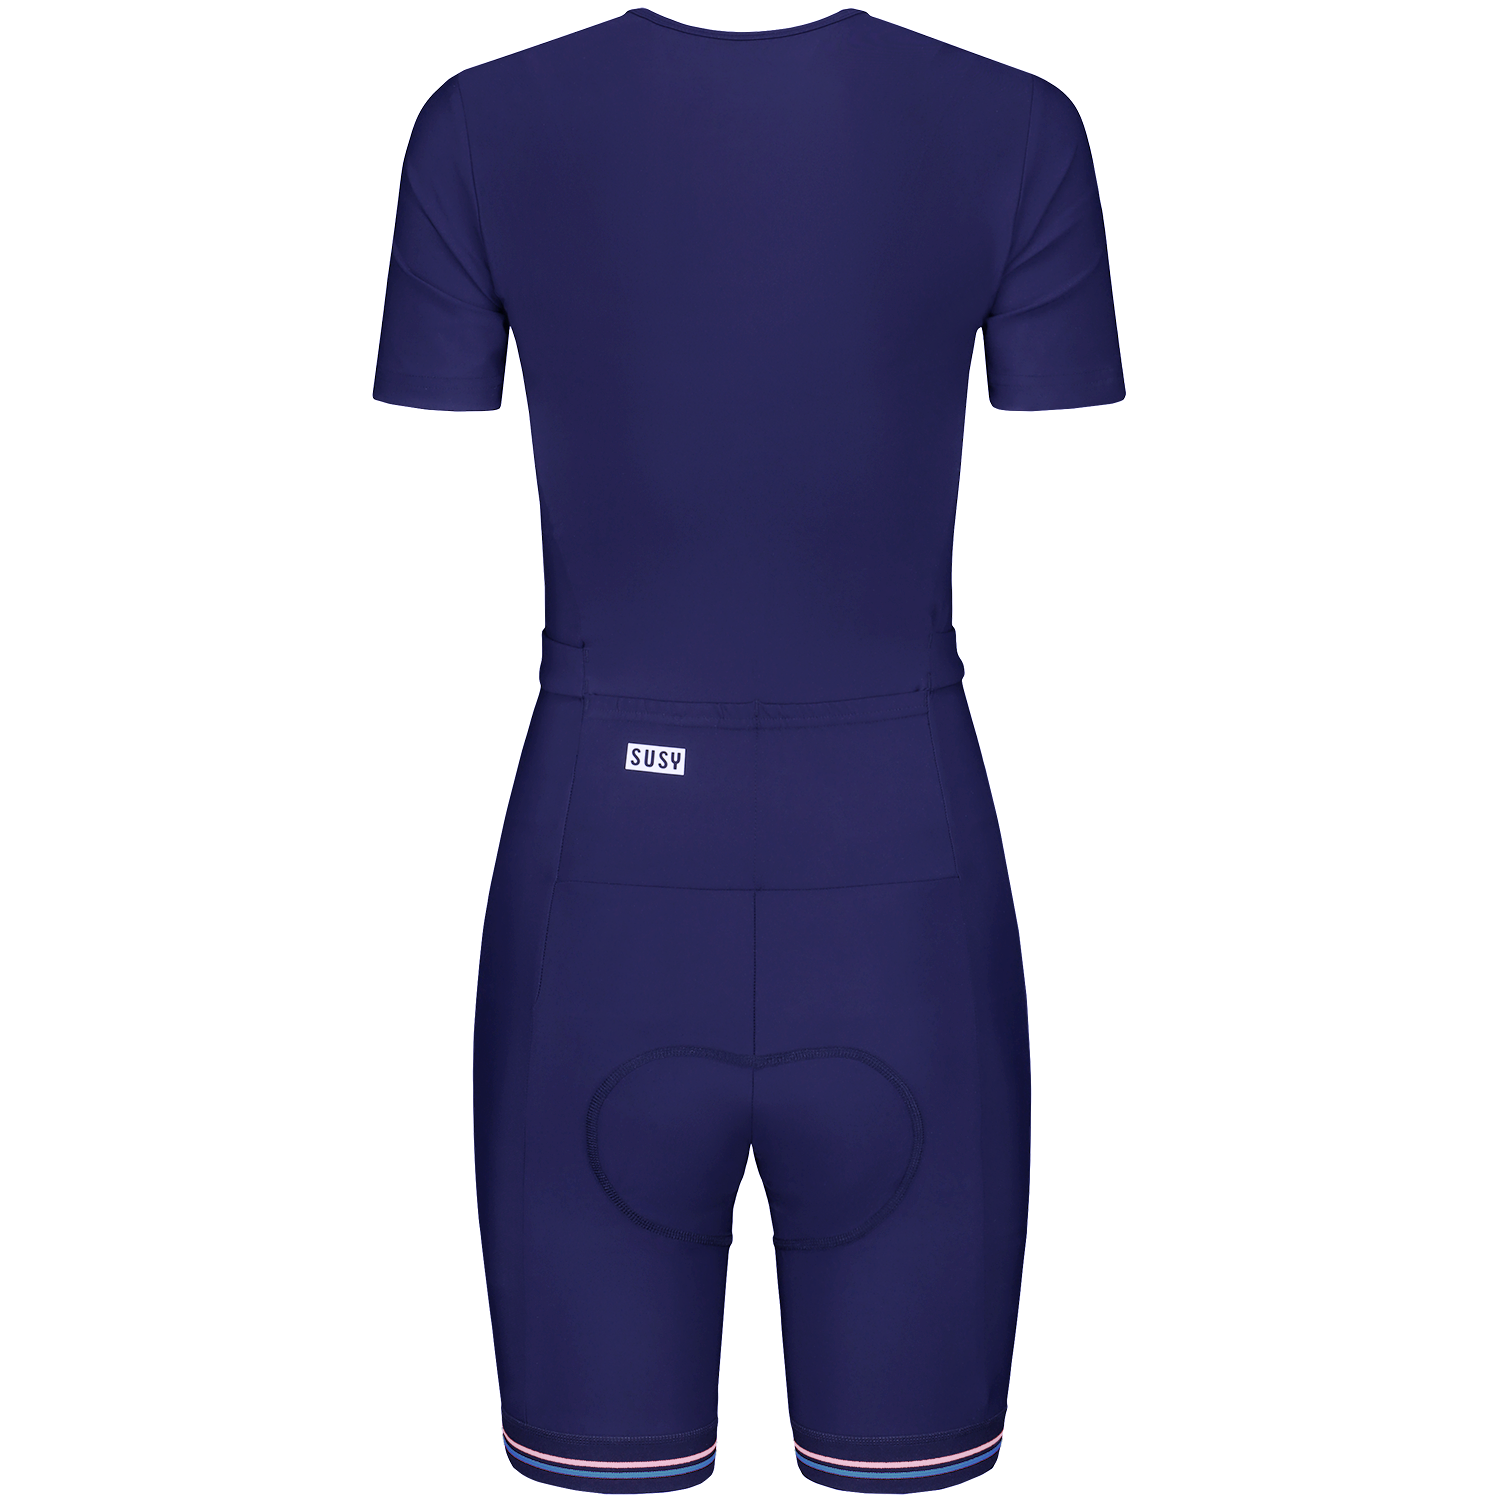 Women's cyclingsuit - Navy